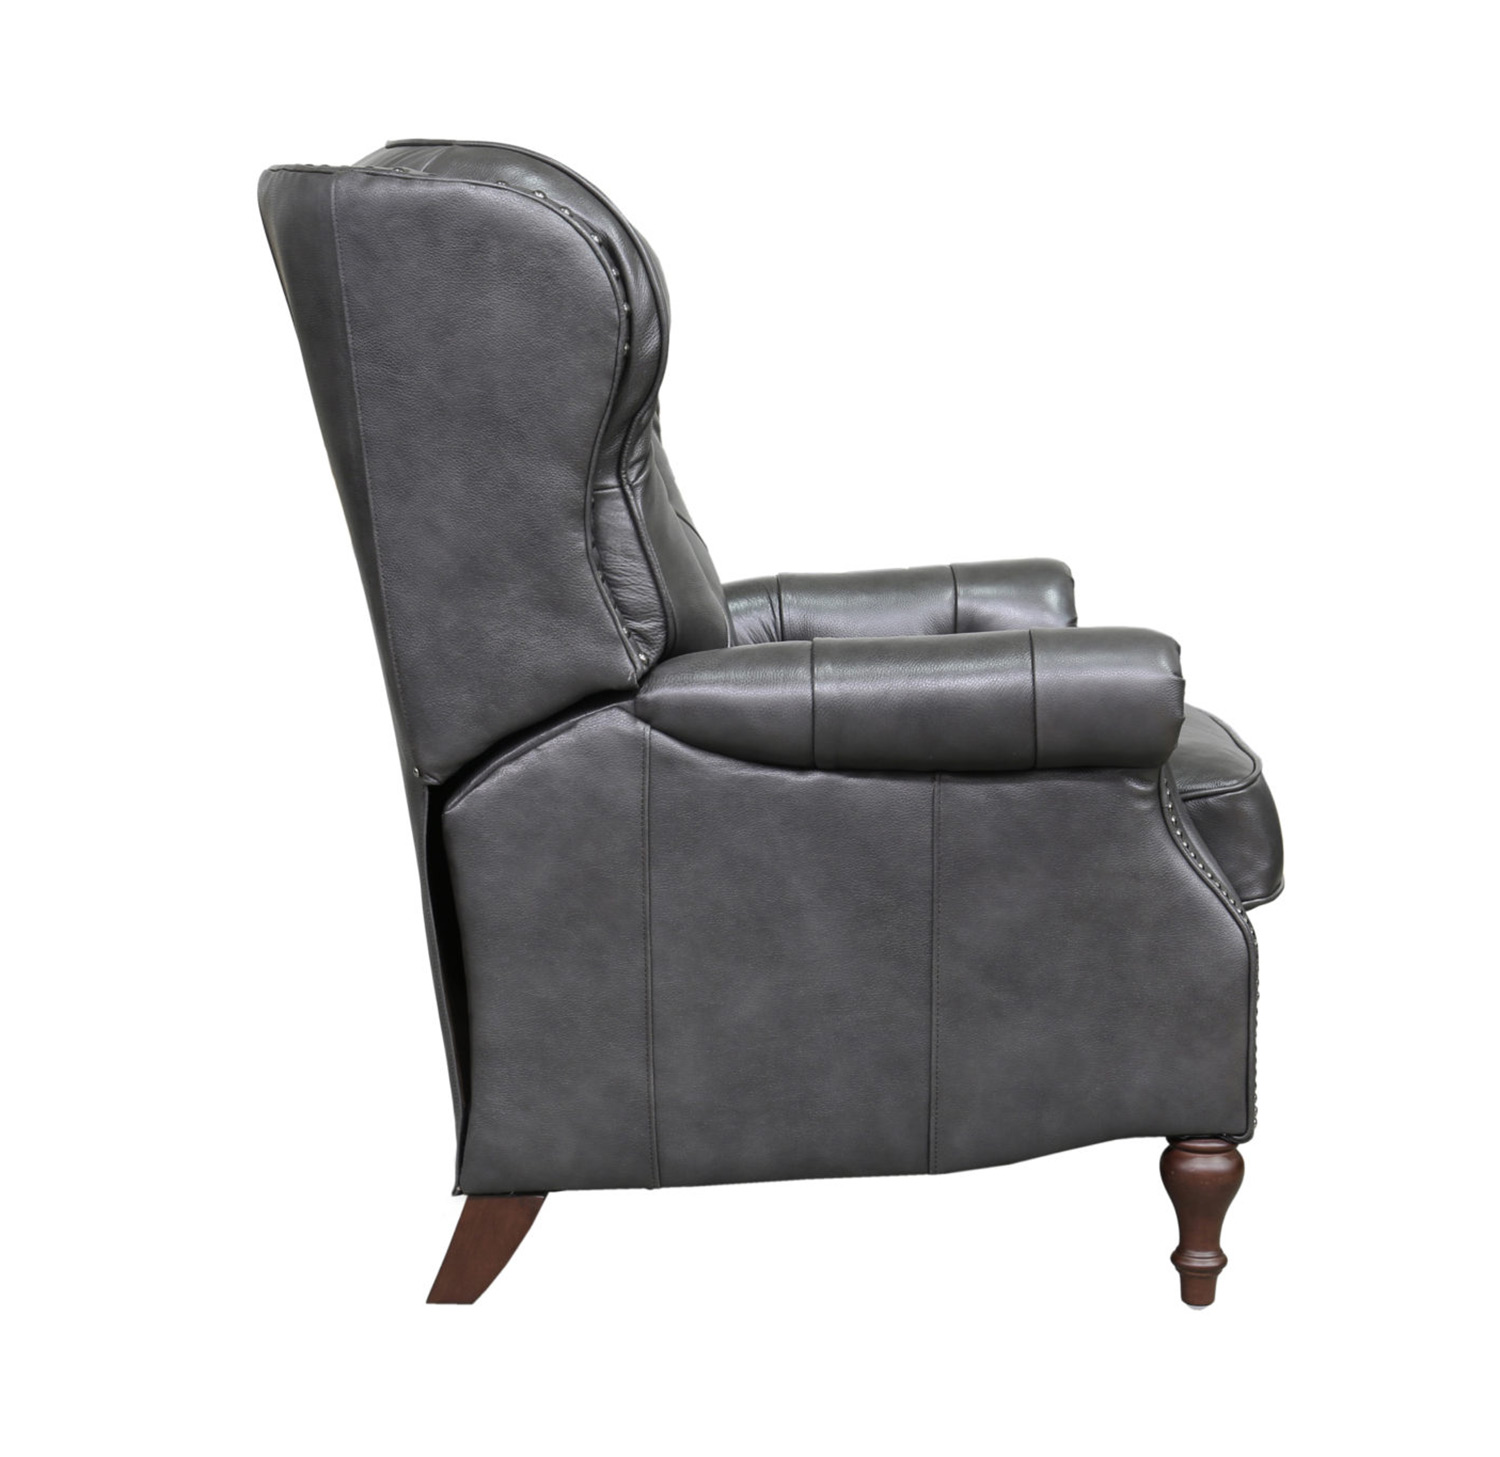 Barcalounger Kendall Recliner Chair - Wrenn Gray/all leather